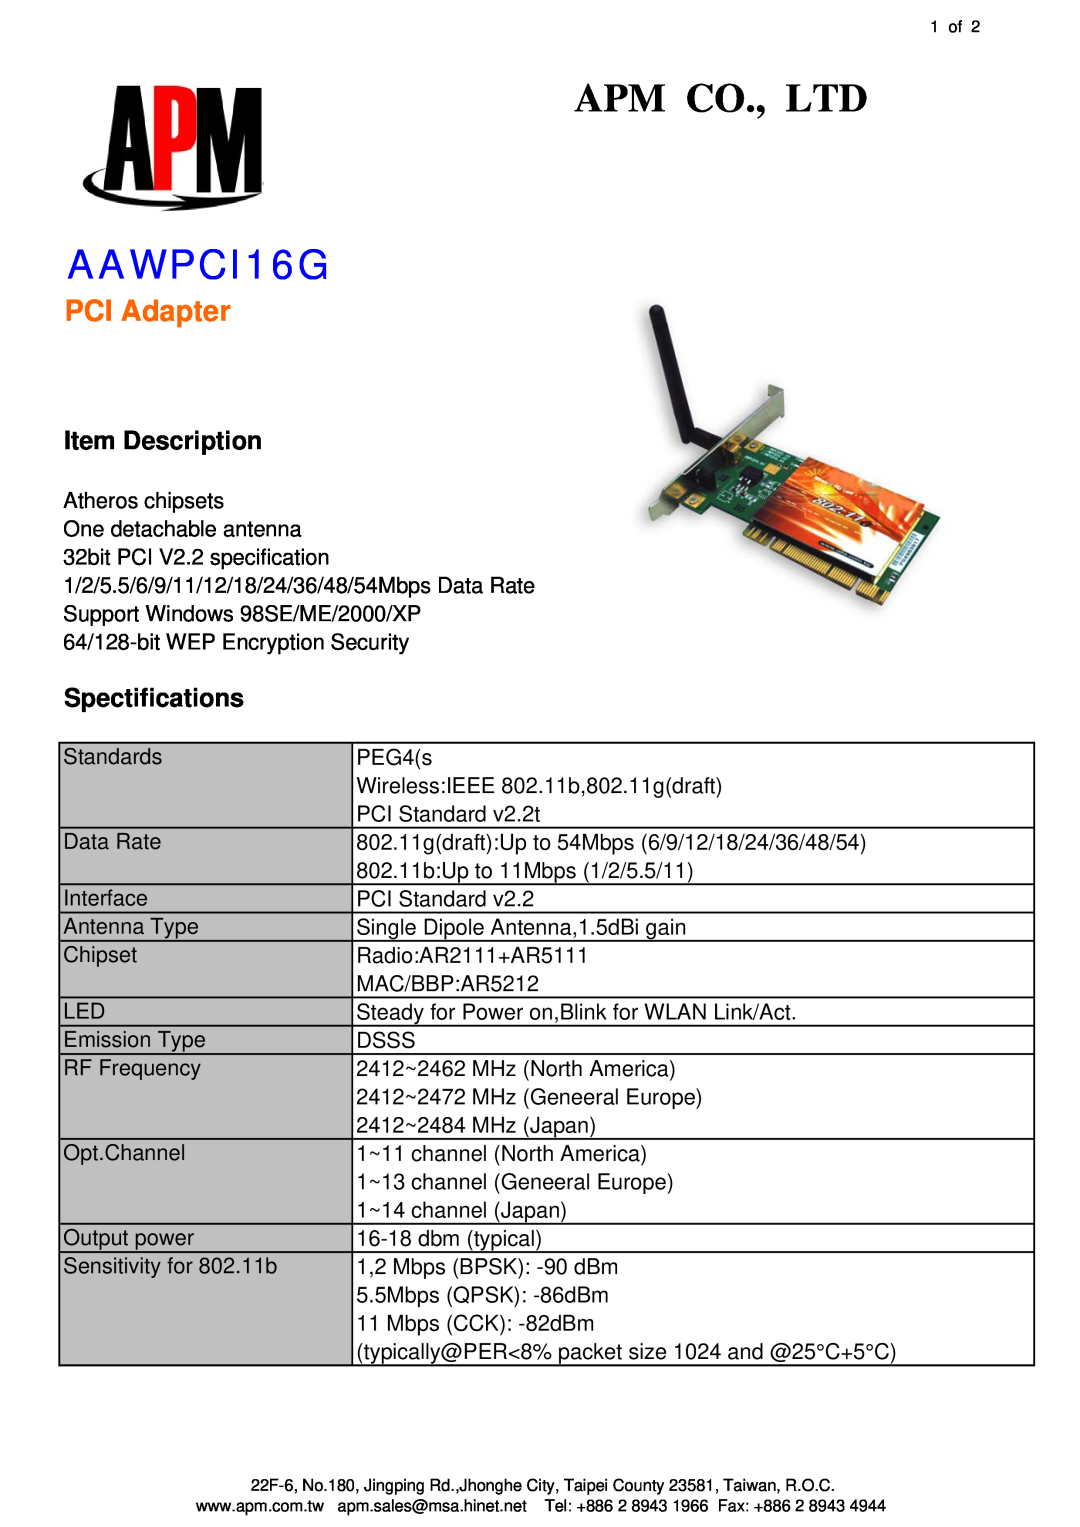 APM AAWPCI16G manual PCI Adapter, Item Description, Spectifications 